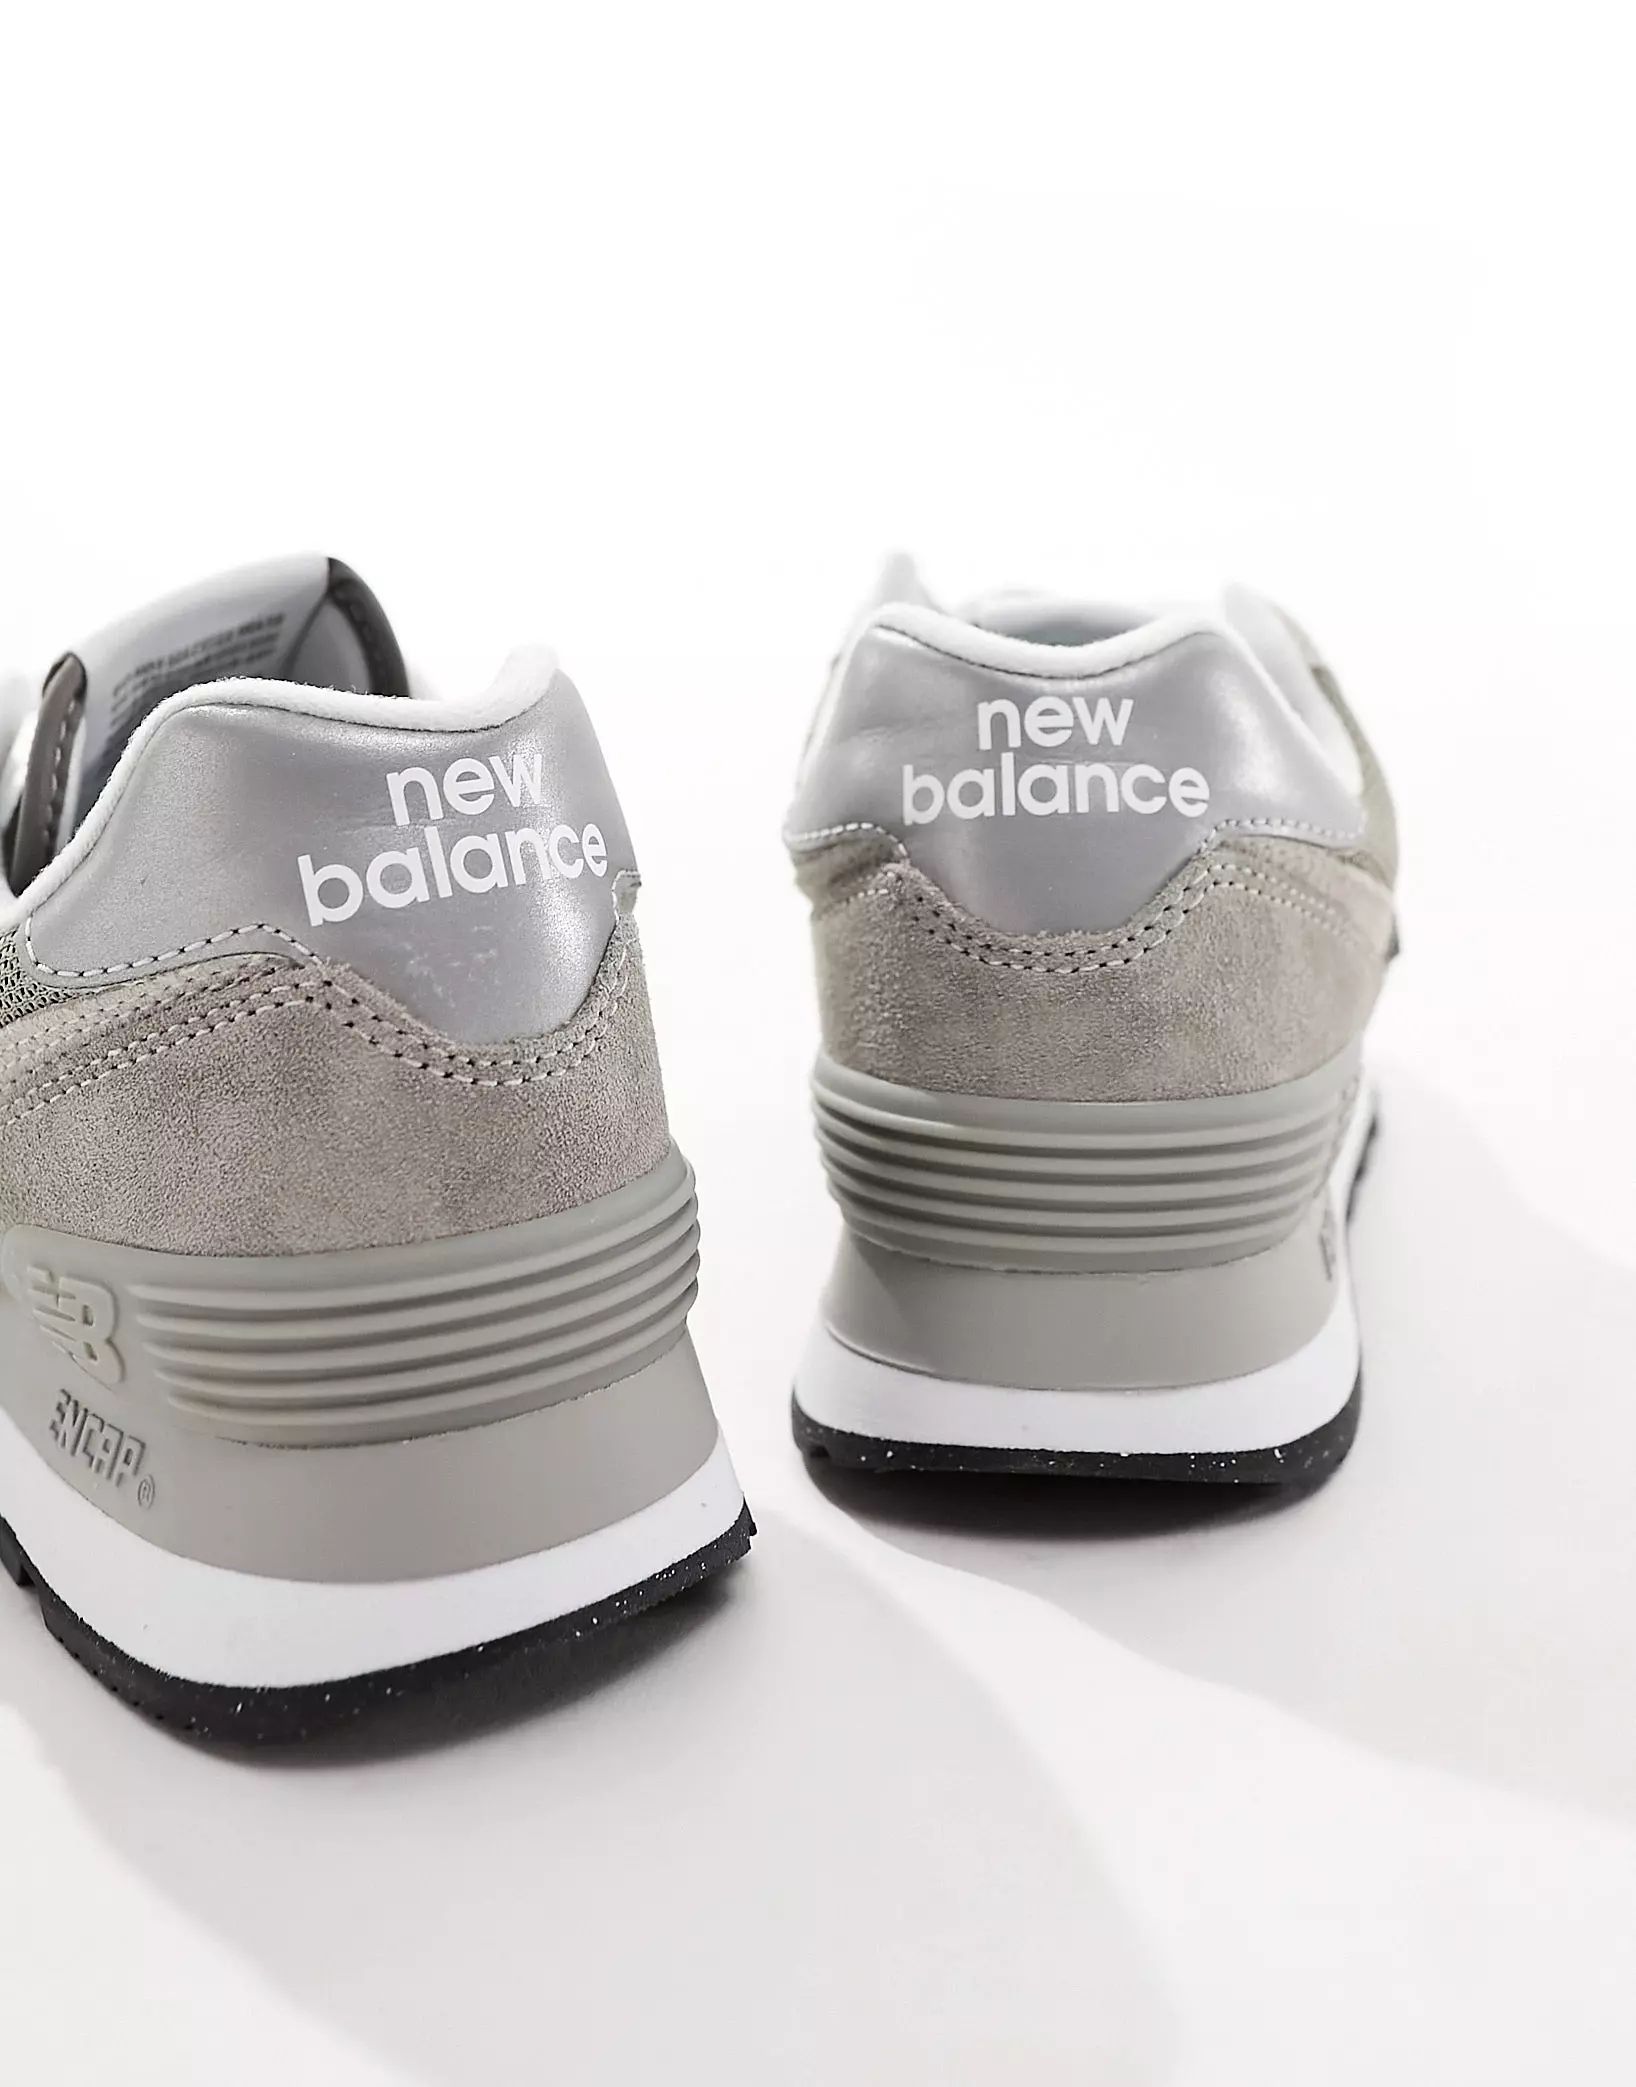 New Balance – 574 – Sneaker in Grau und Weiß | ASOS (Global)